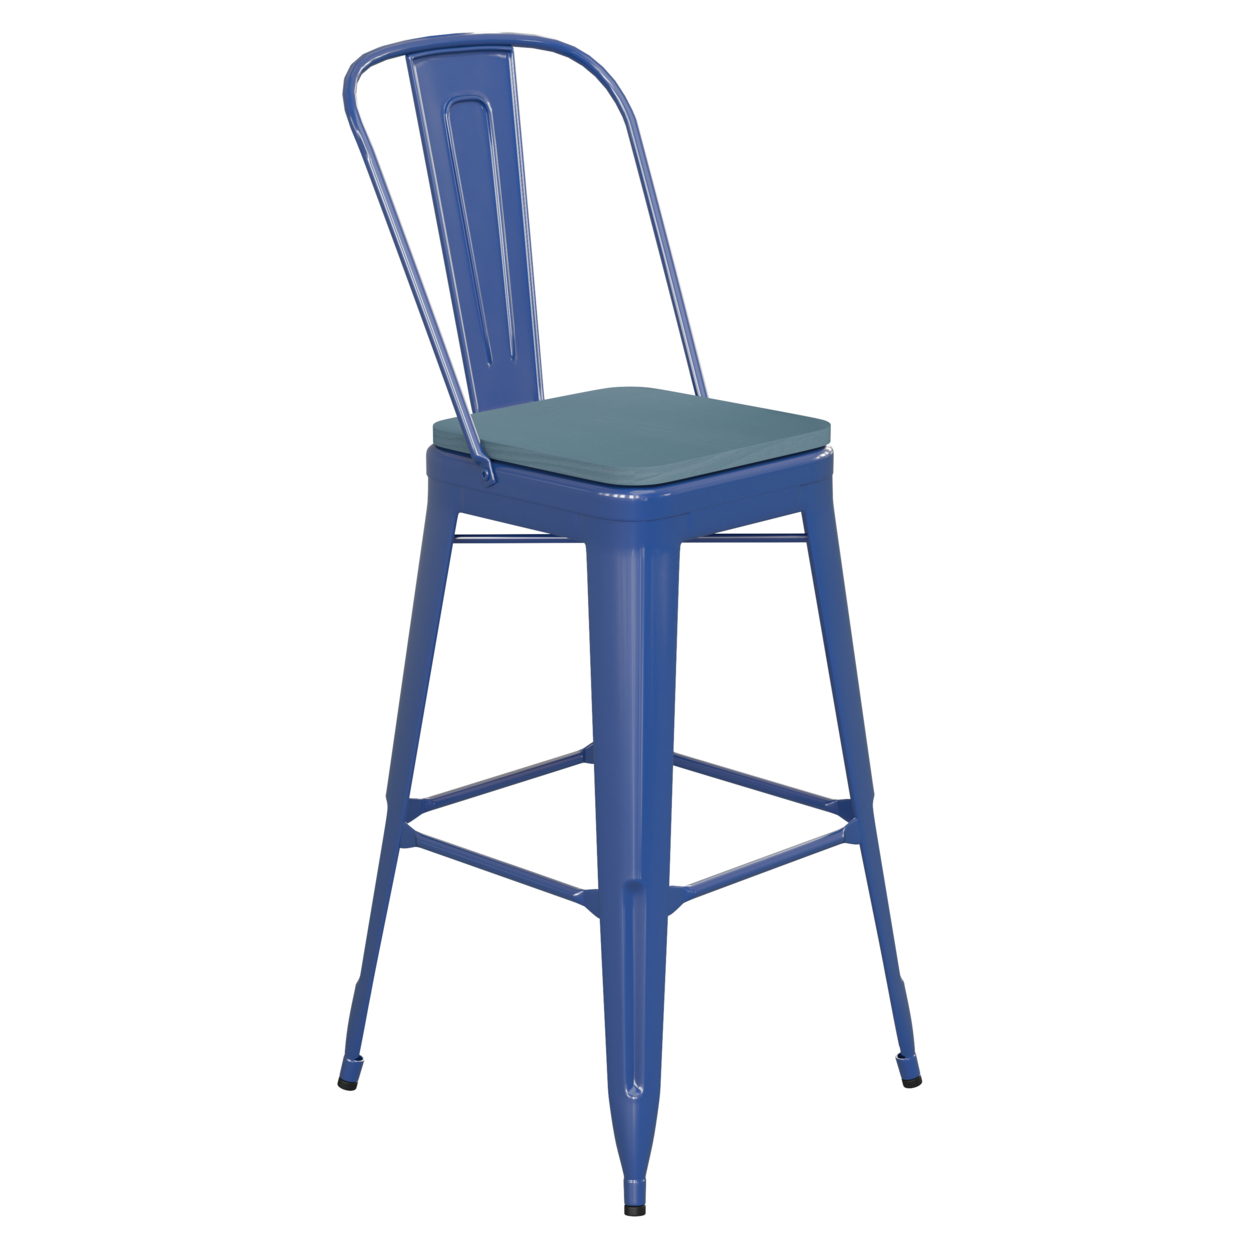 30 Blue Stool-Teal Seat